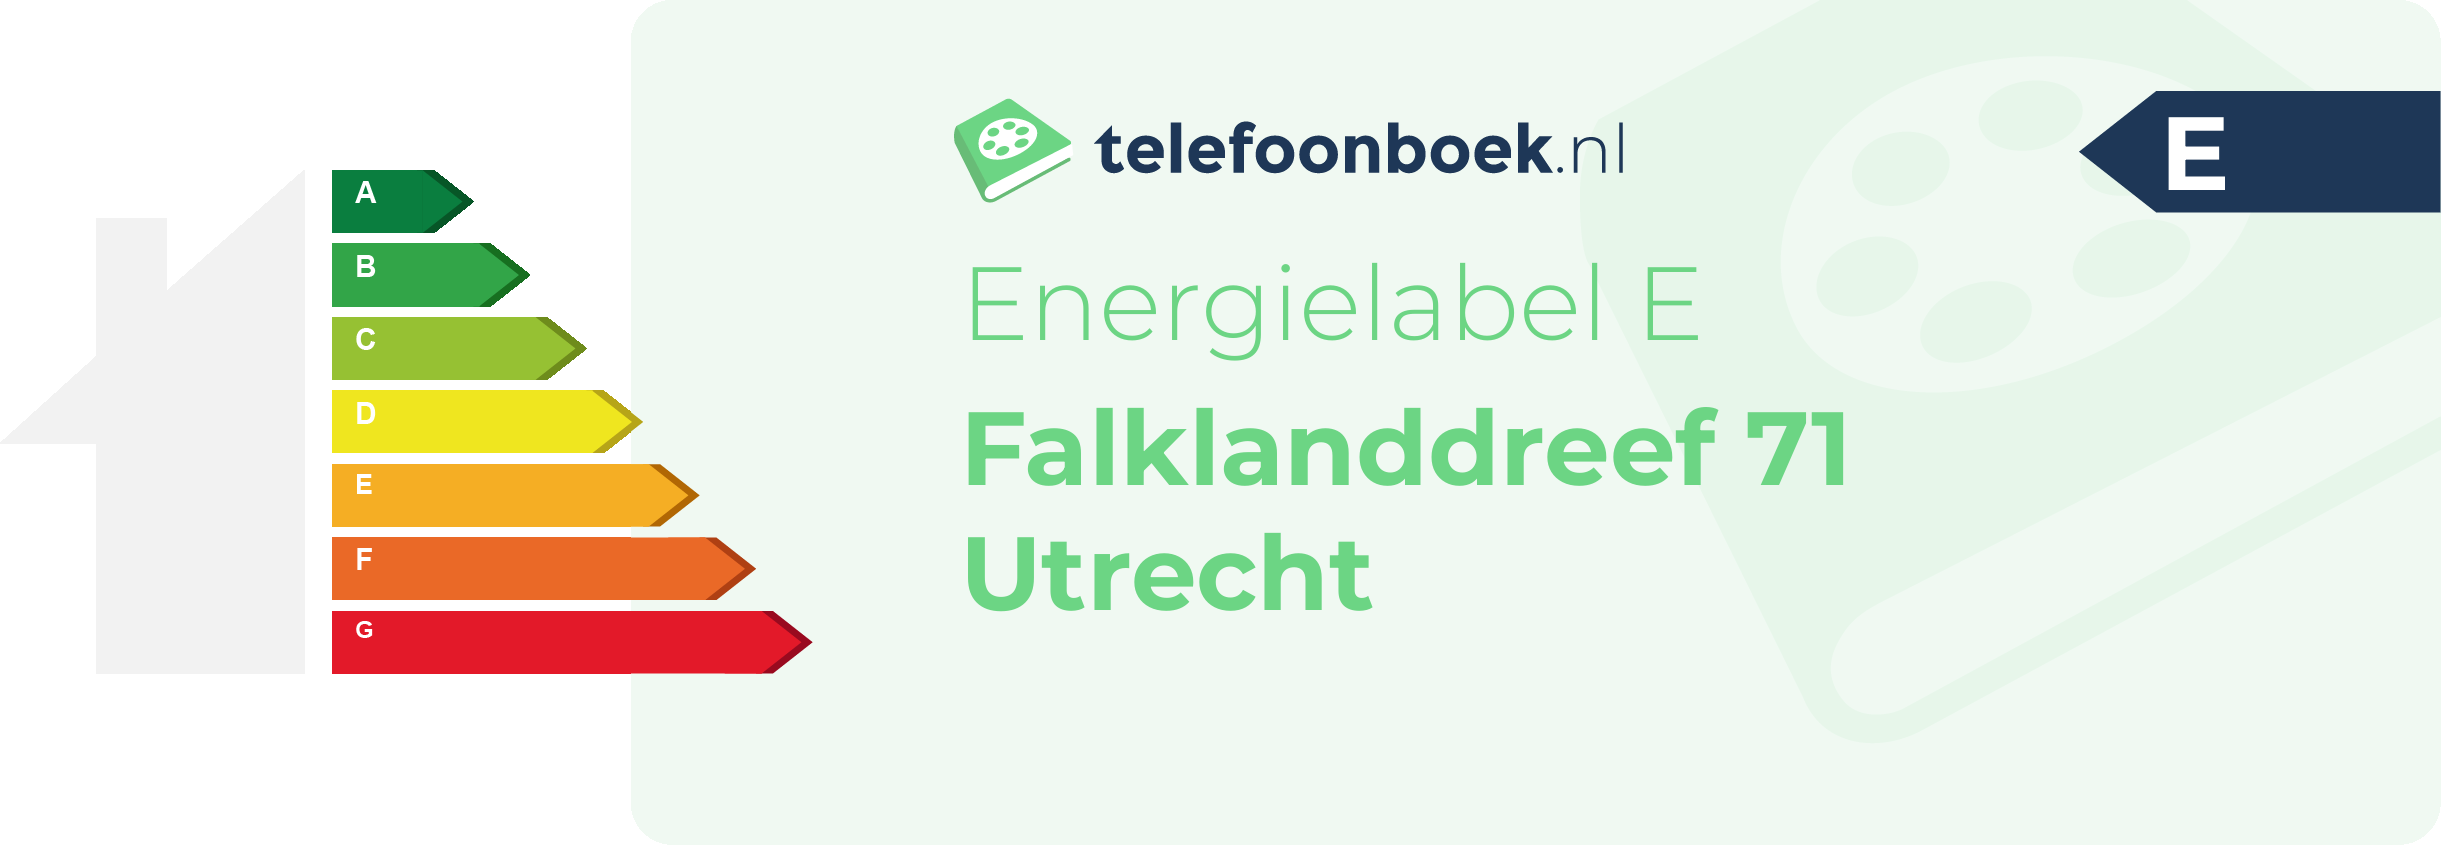 Energielabel Falklanddreef 71 Utrecht